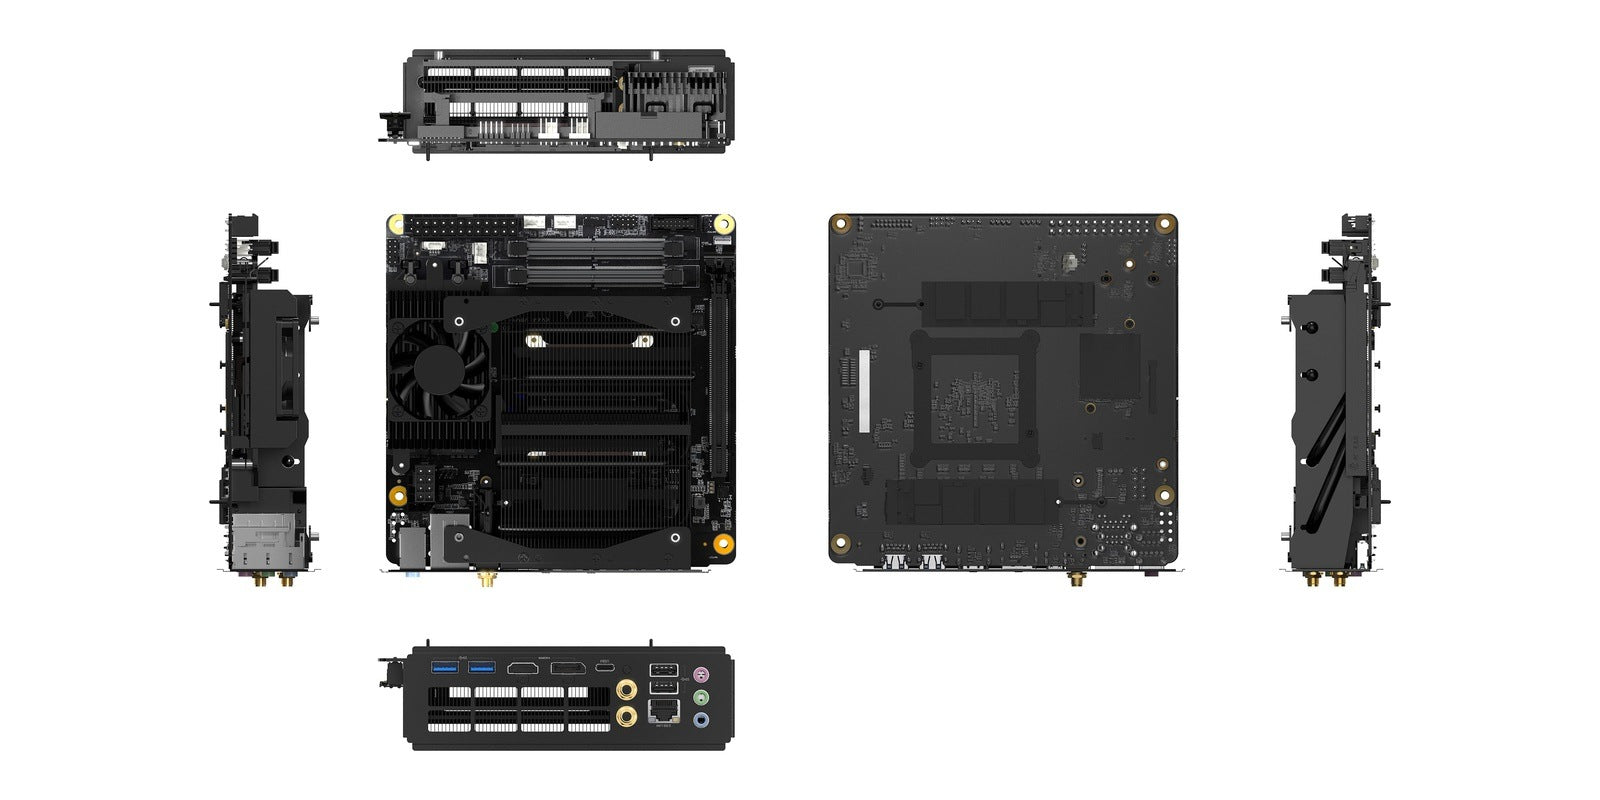 Minisforum Intros BD770i Motherboard: AMD Ryzen 7 7745HX CPU & PCIe 5.0  dGPU Support For $399